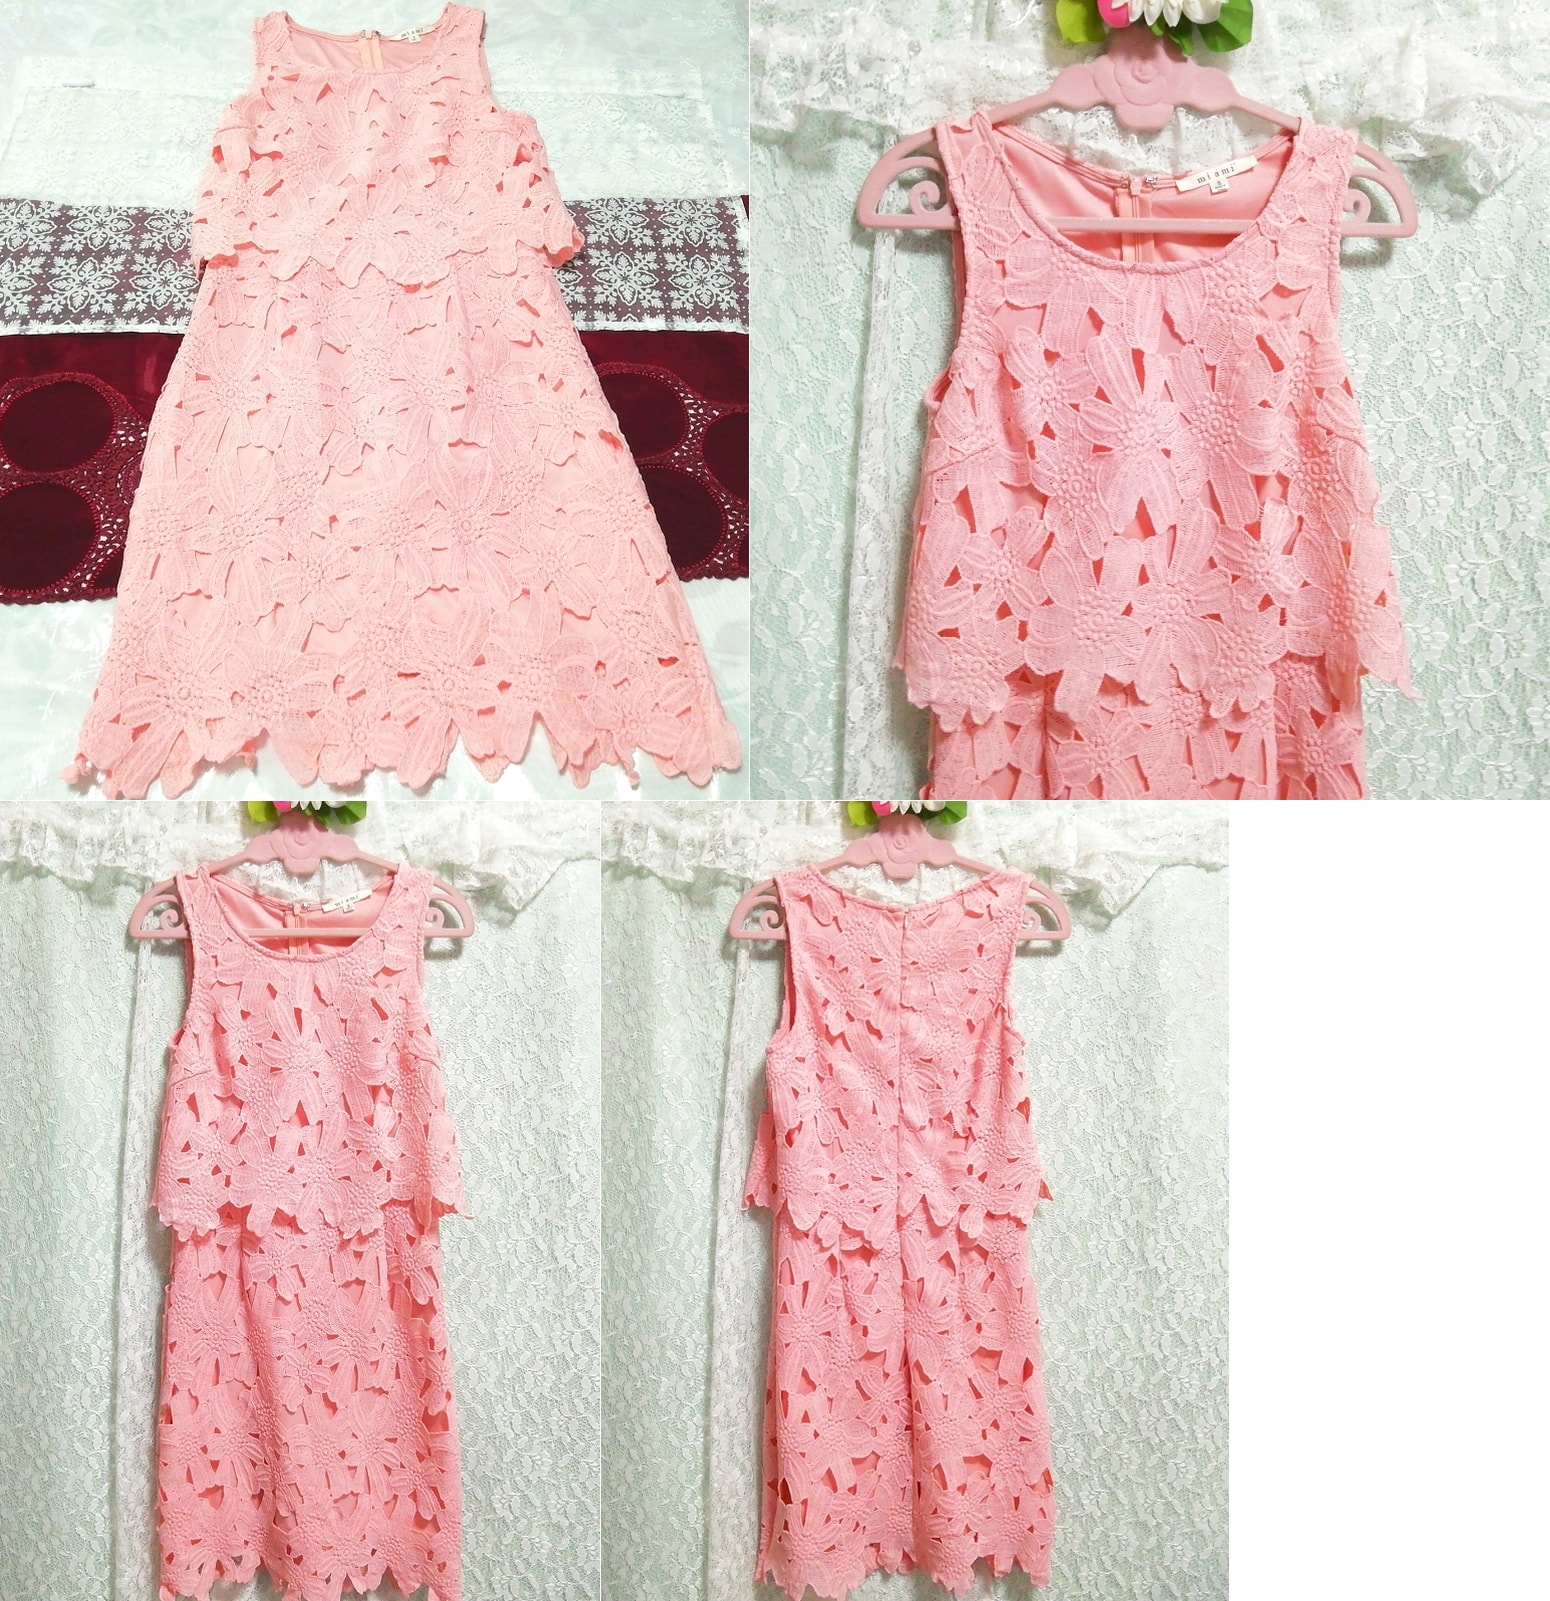 Pink lace knit sleeveless negligee nightgown nightwear half dress, knee length skirt, m size